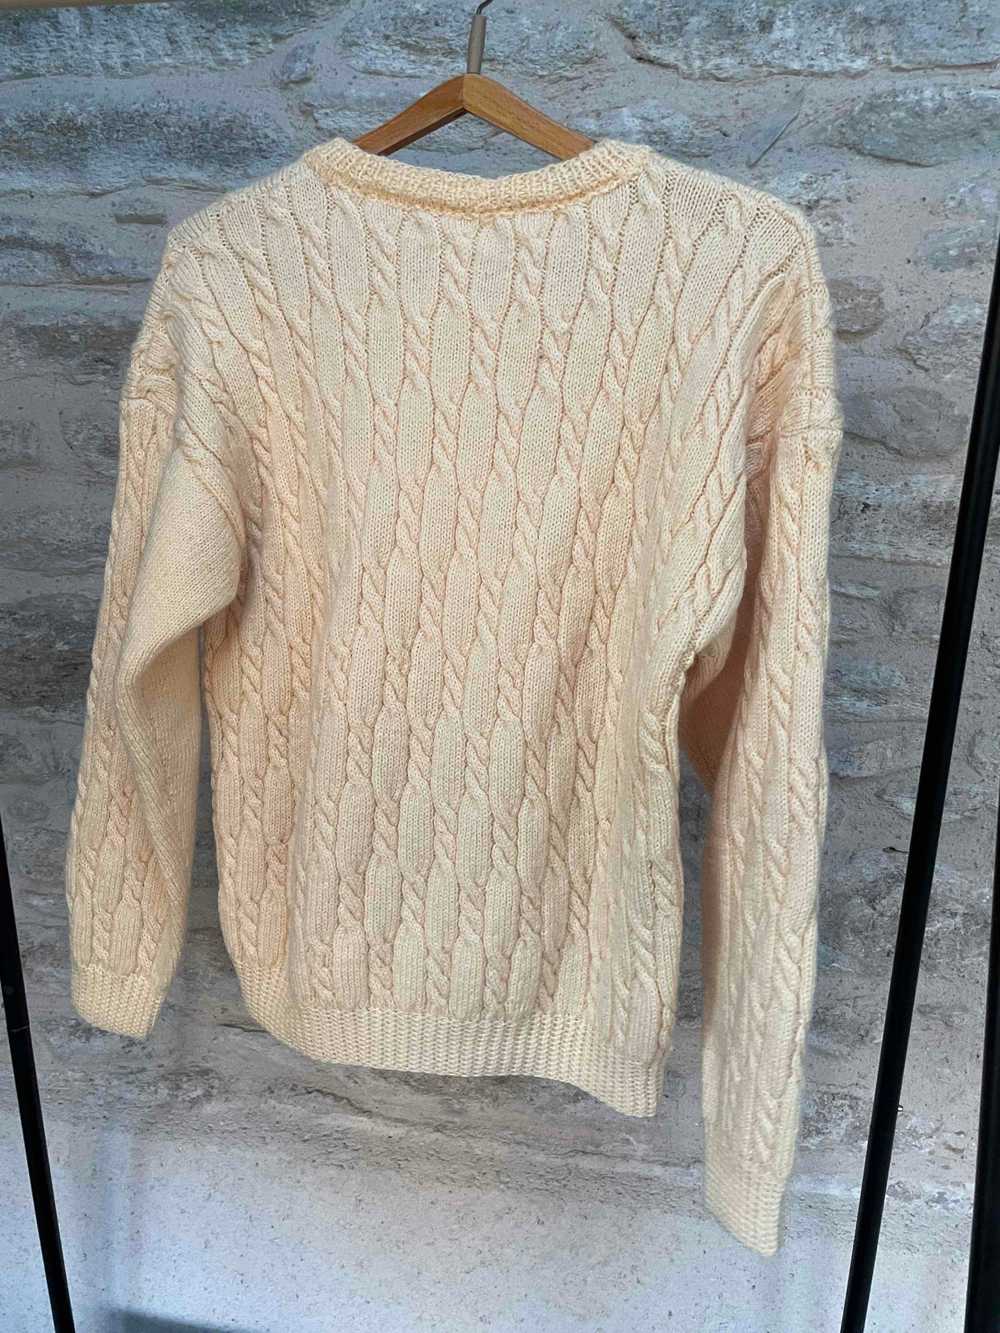 Woolen sweater - Wool sweater, braided, hand knit… - image 3